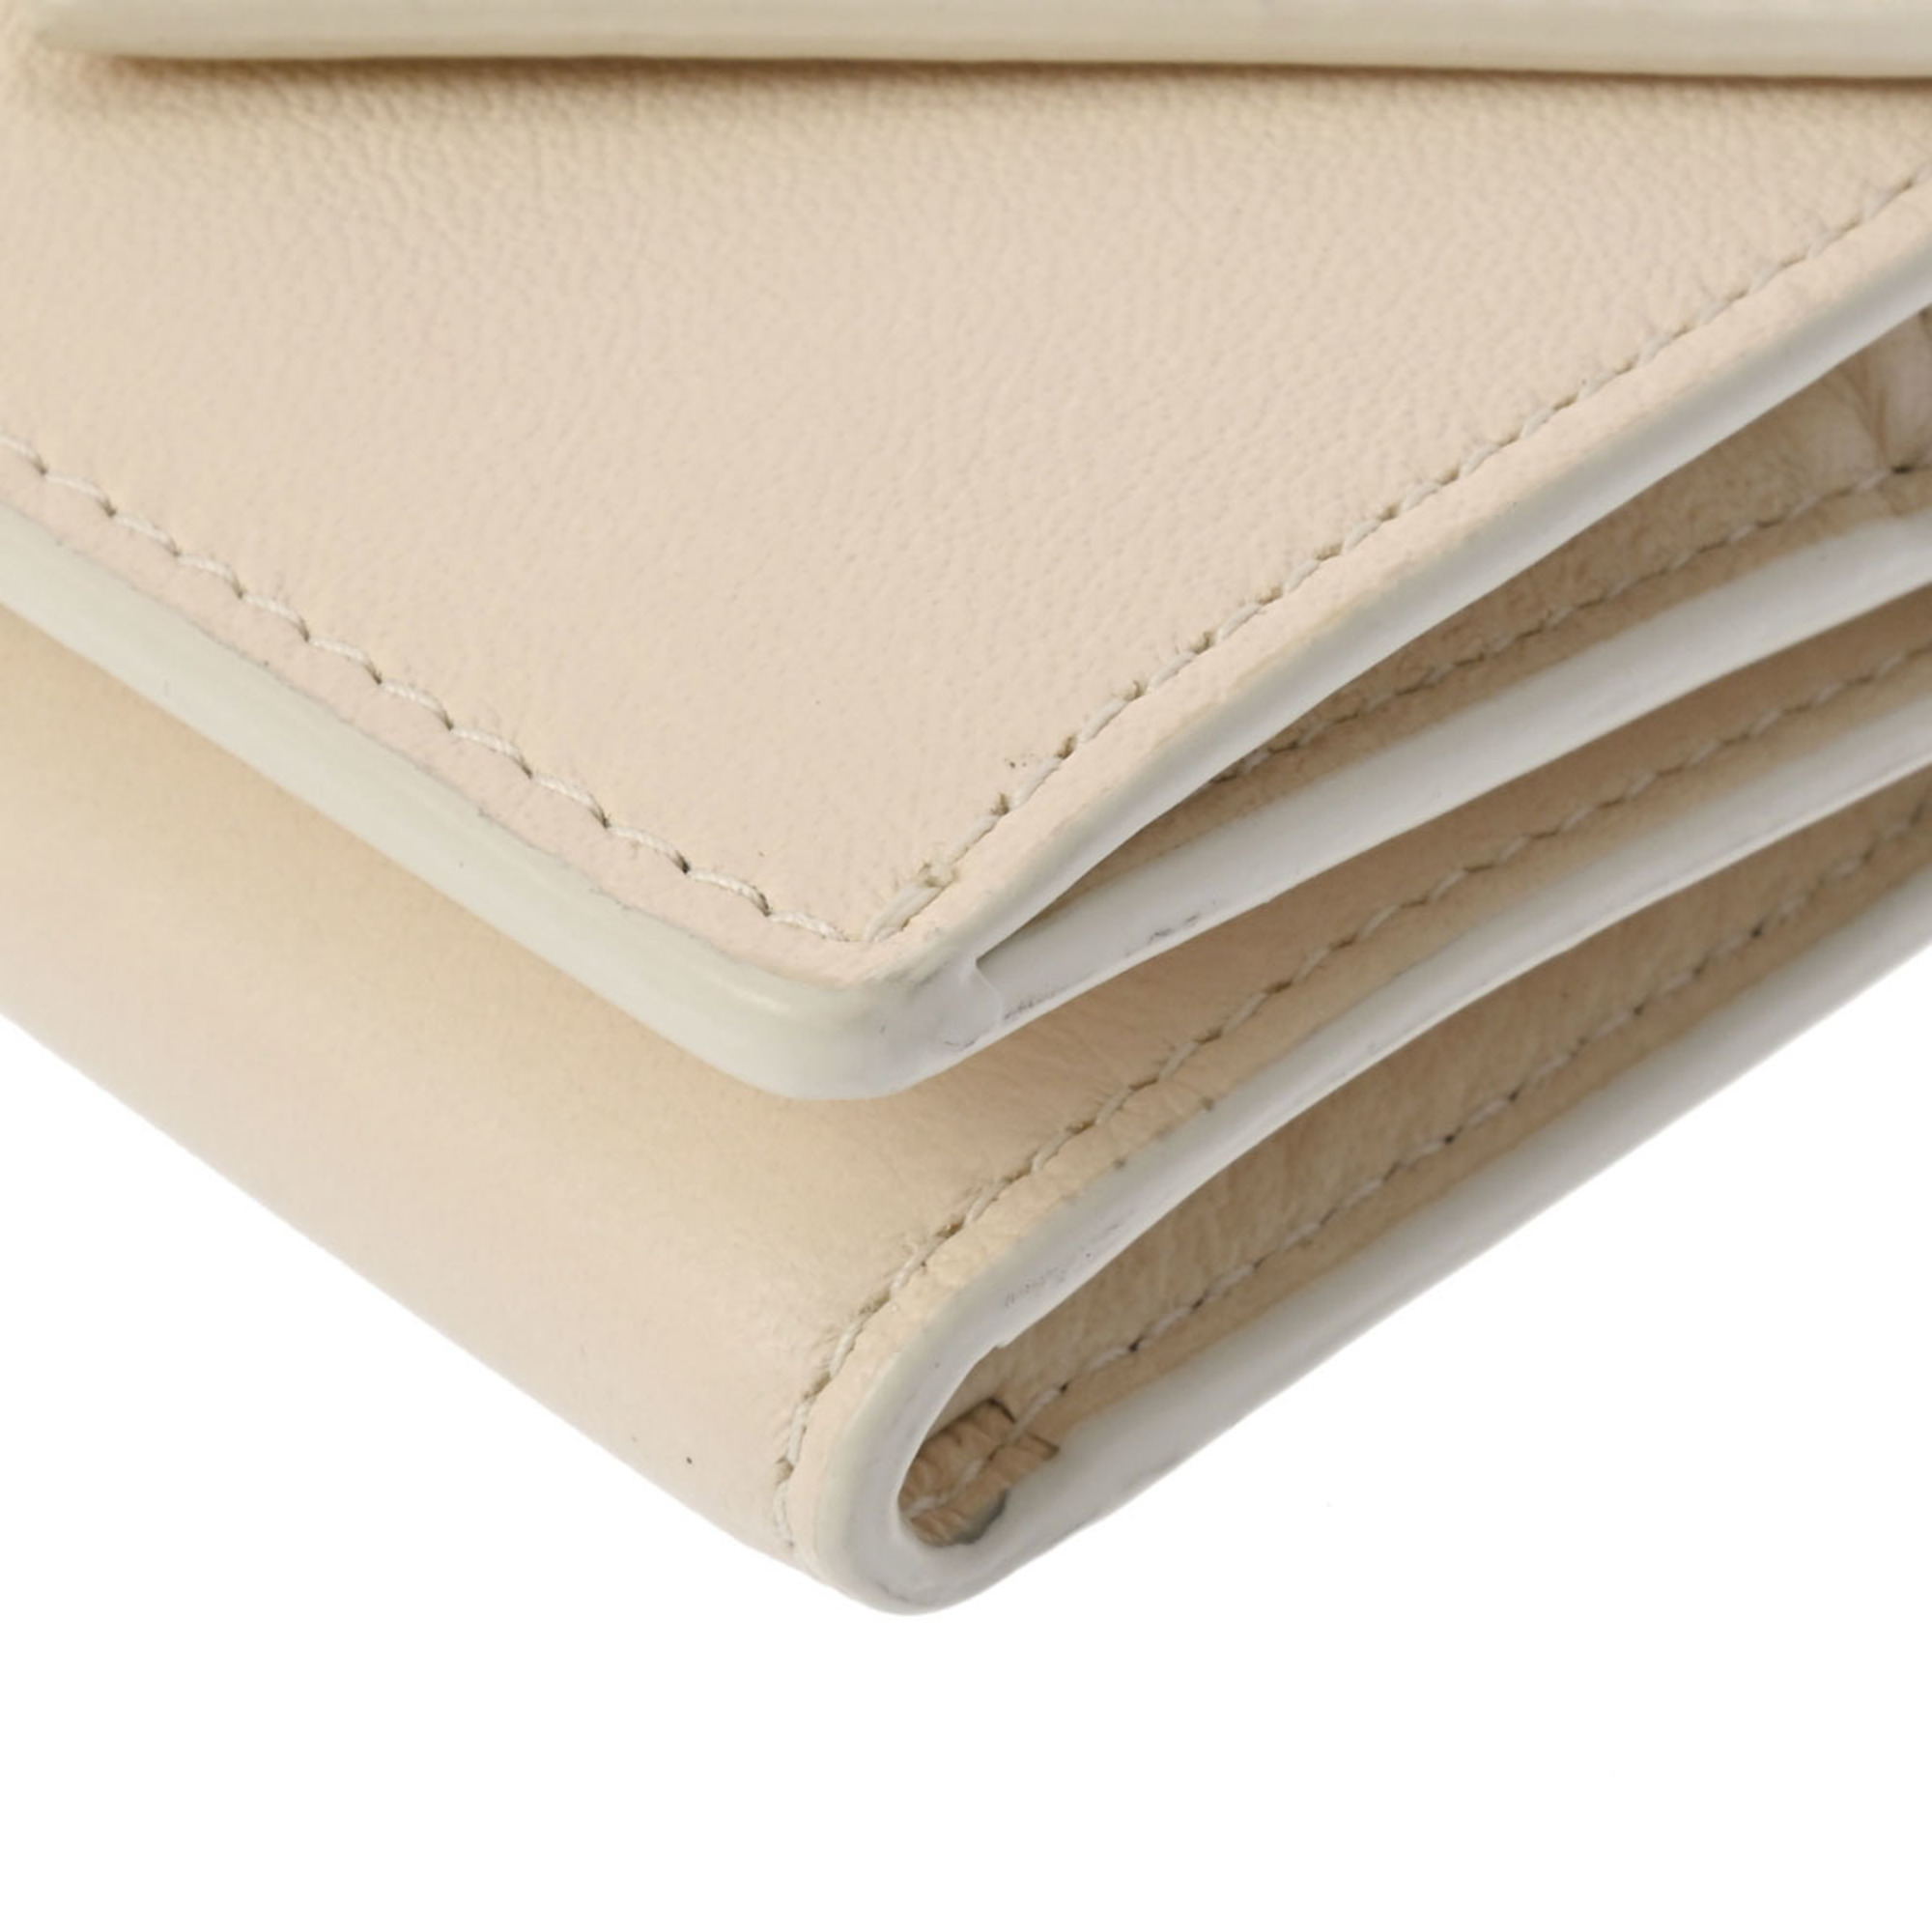 BALENCIAGA Paper Wallet Cream 391446 Unisex Calf Leather Tri-fold